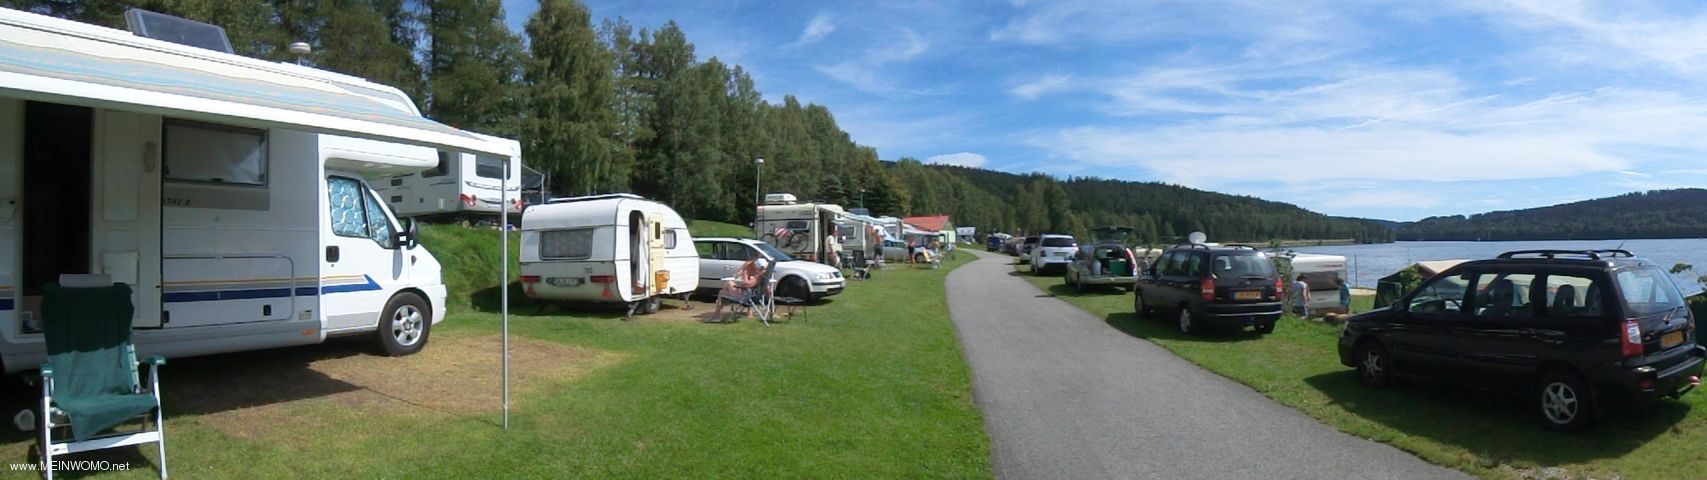  Camping Frymburk, Lipnomeer, Tsjechi, augustus 2011